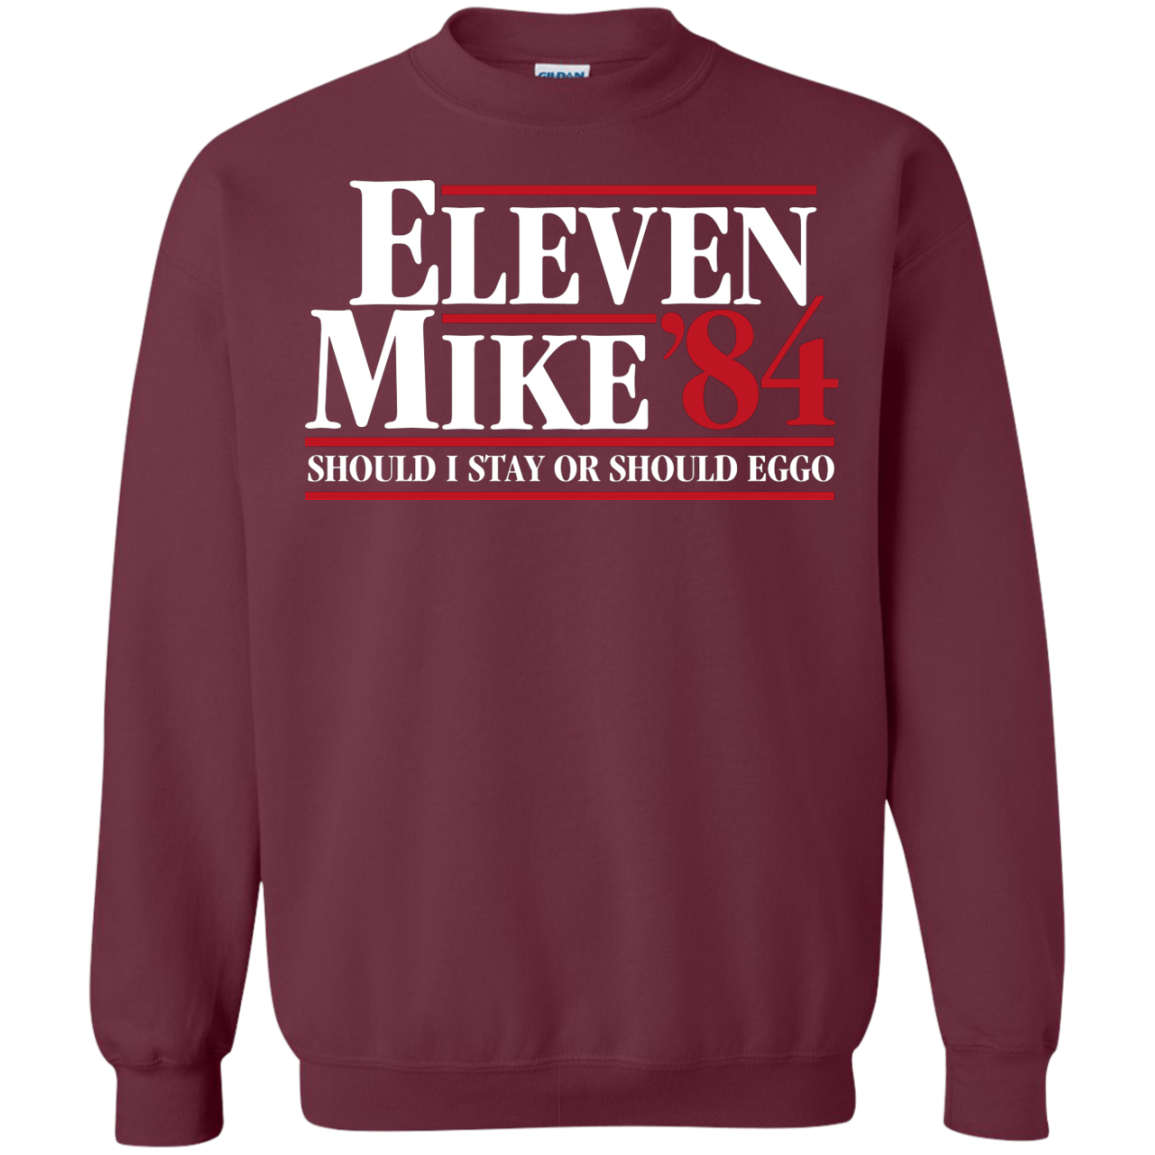 Eleven Mike 84 - Should I Stay or Should Eggo Crewneck Sweatshirt